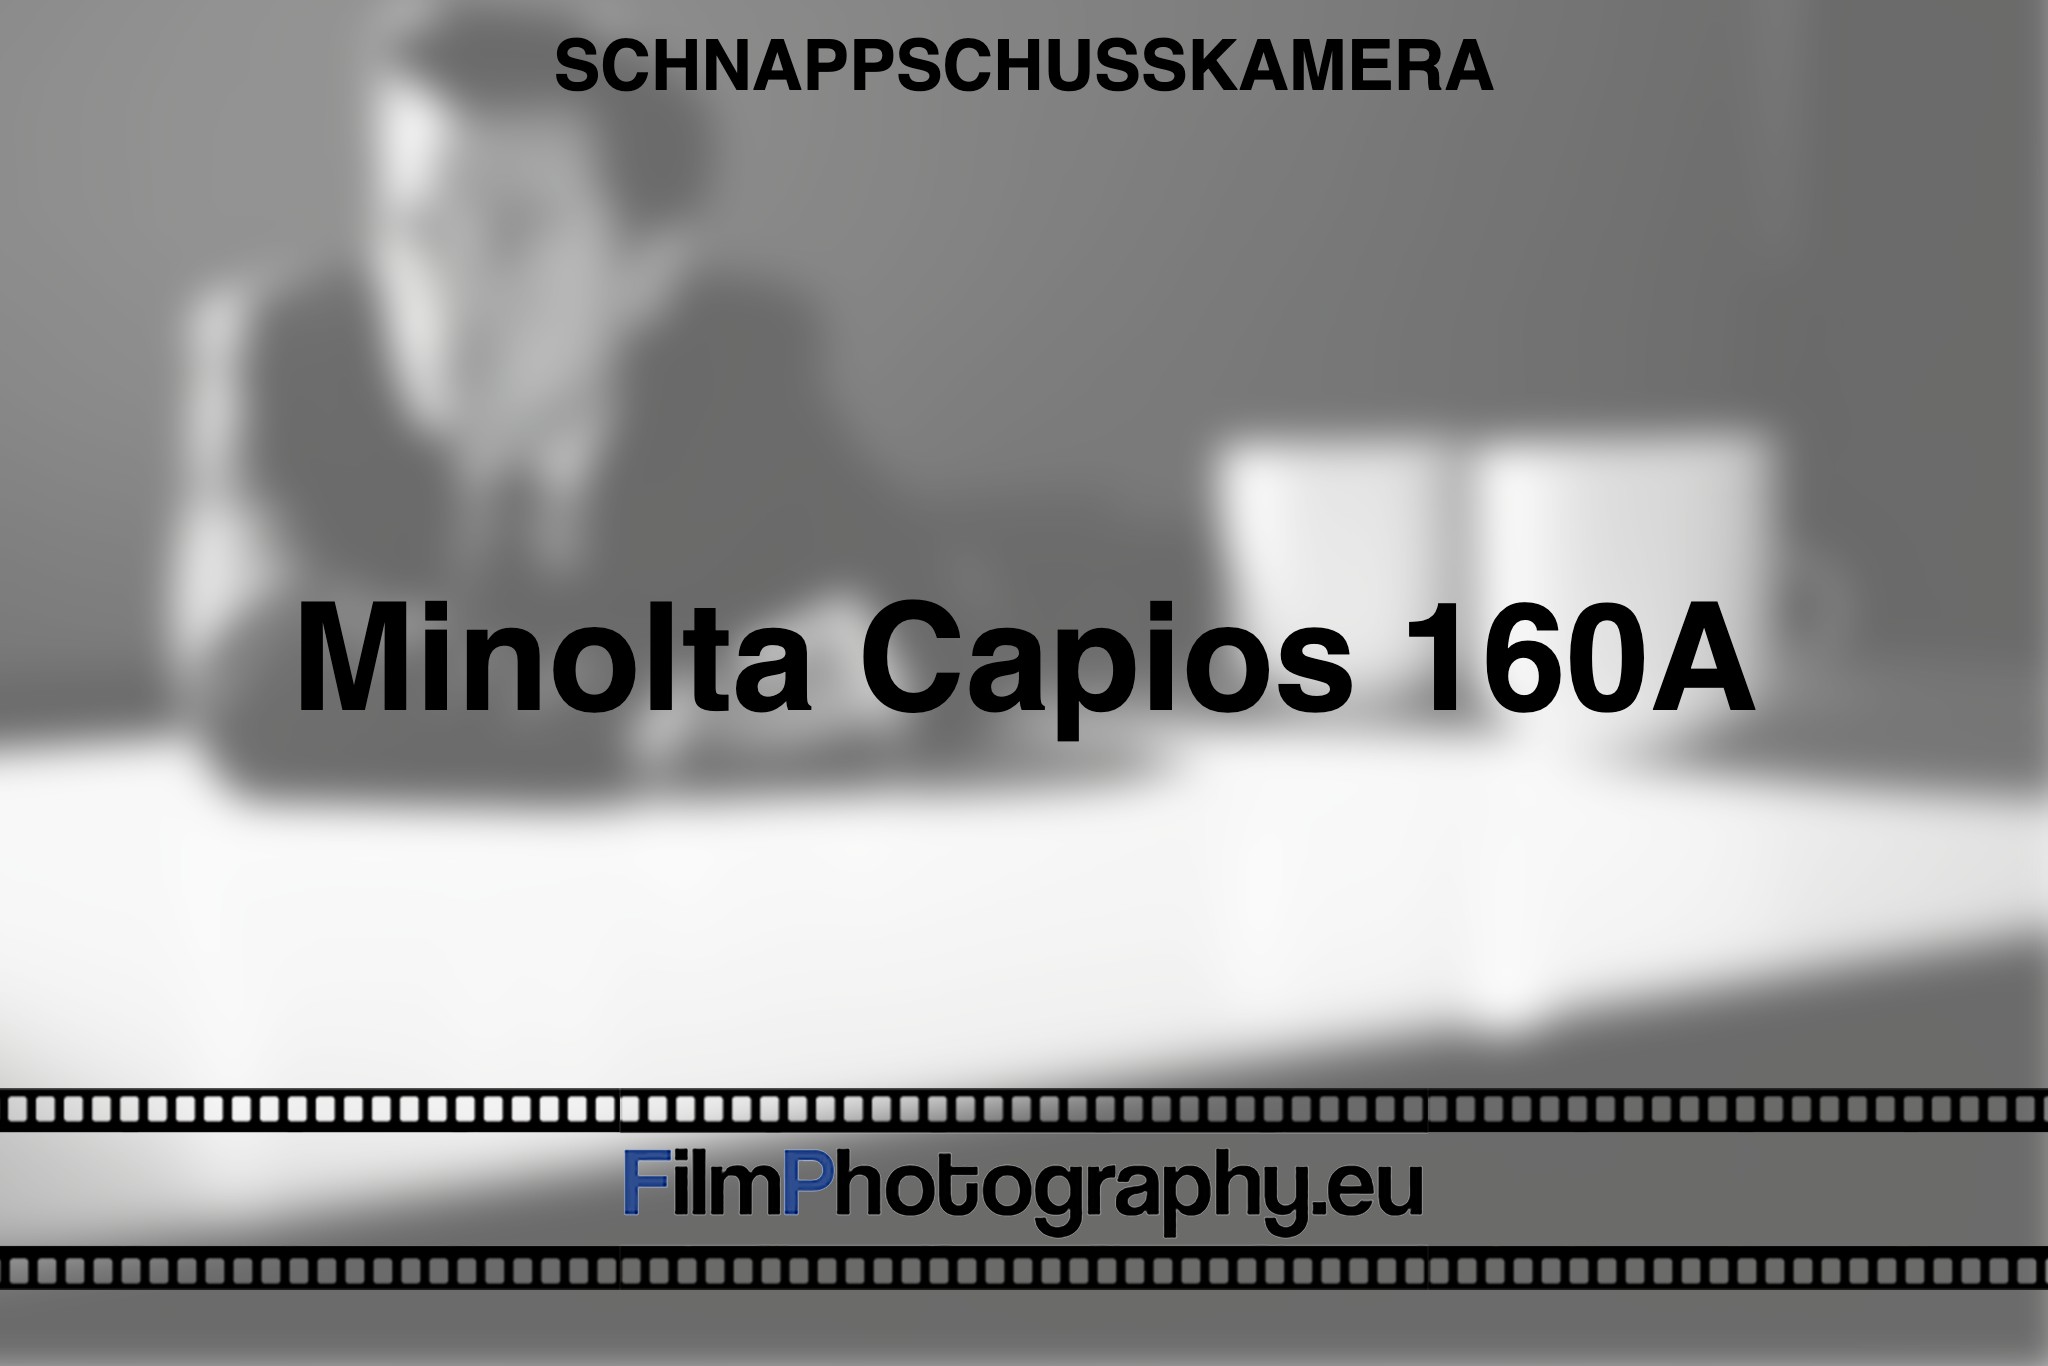 minolta-capios-160a-schnappschusskamera-bnv